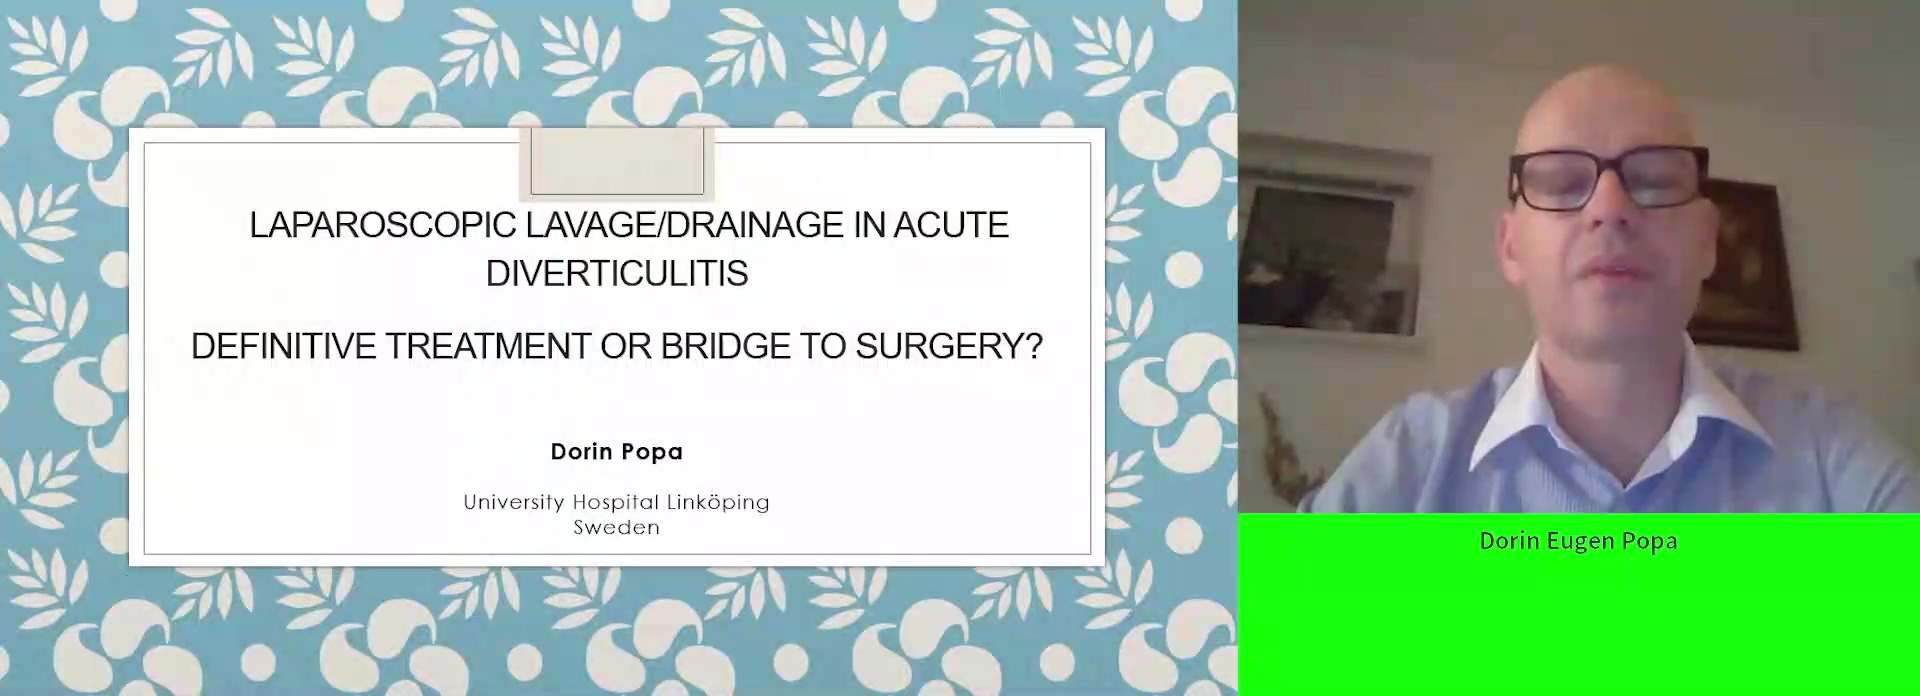 Laparoscopic diverticulitis and lavage/drainage: Definitive treatment or bridge to surgery?